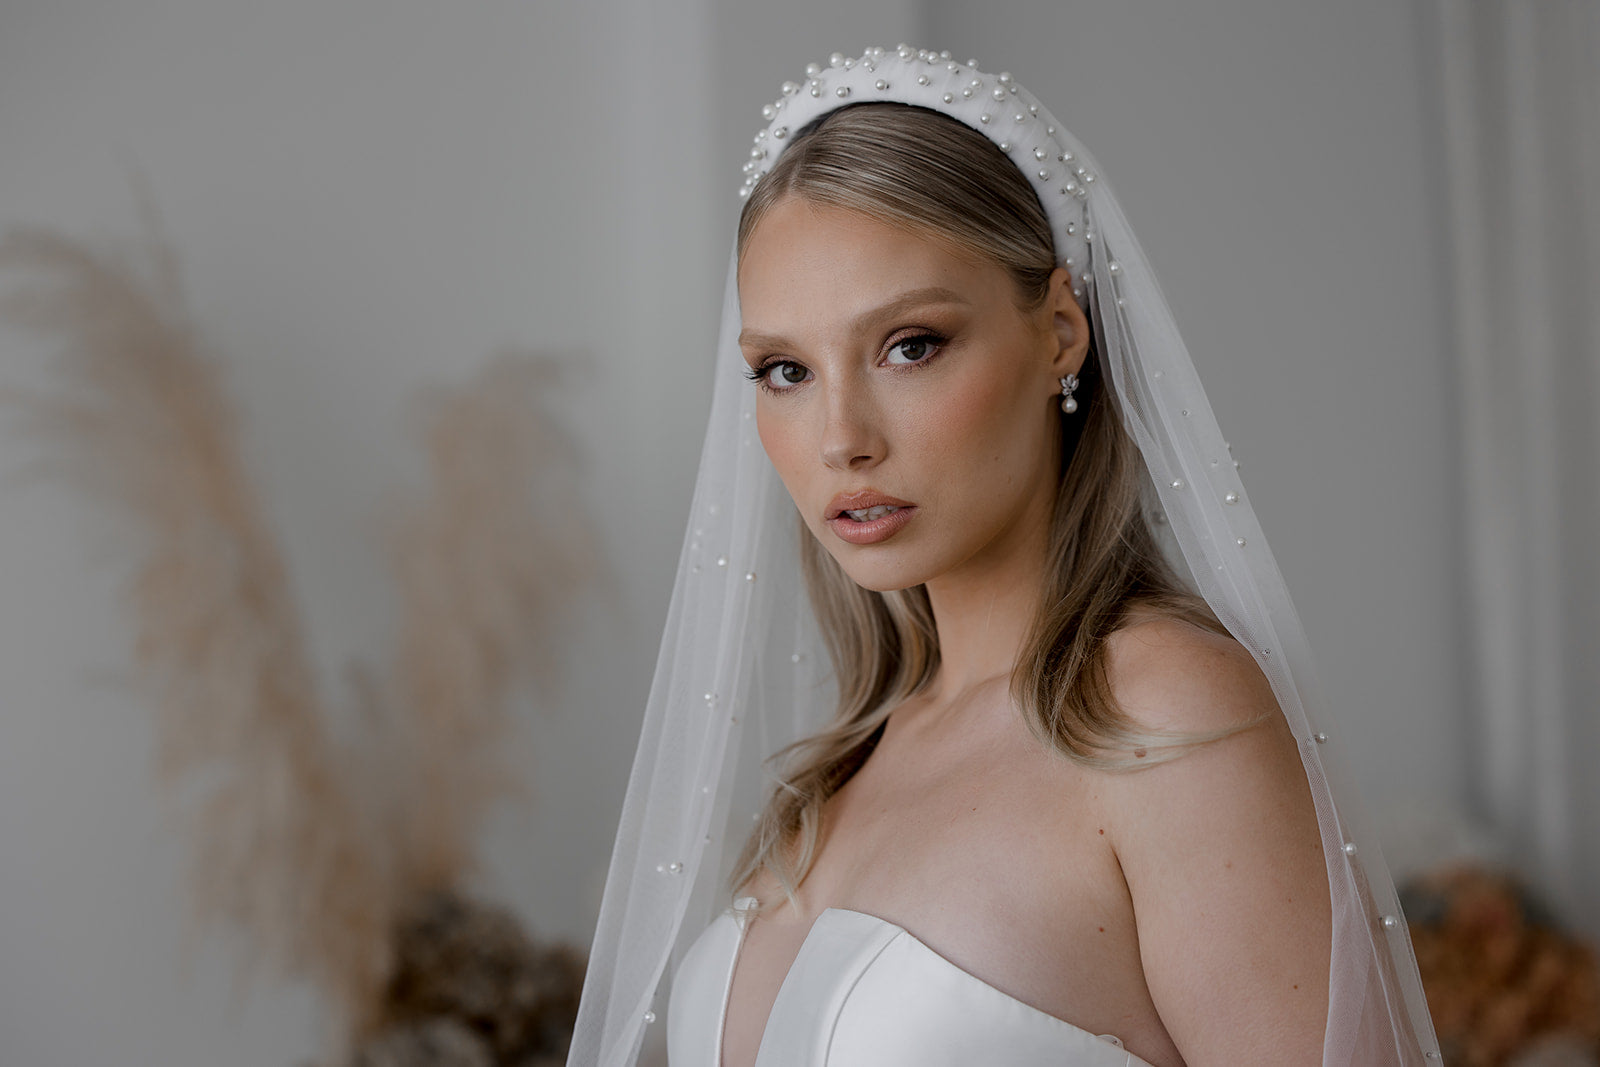 Bella - Pretty Bridal Crystal Pearl Earrings